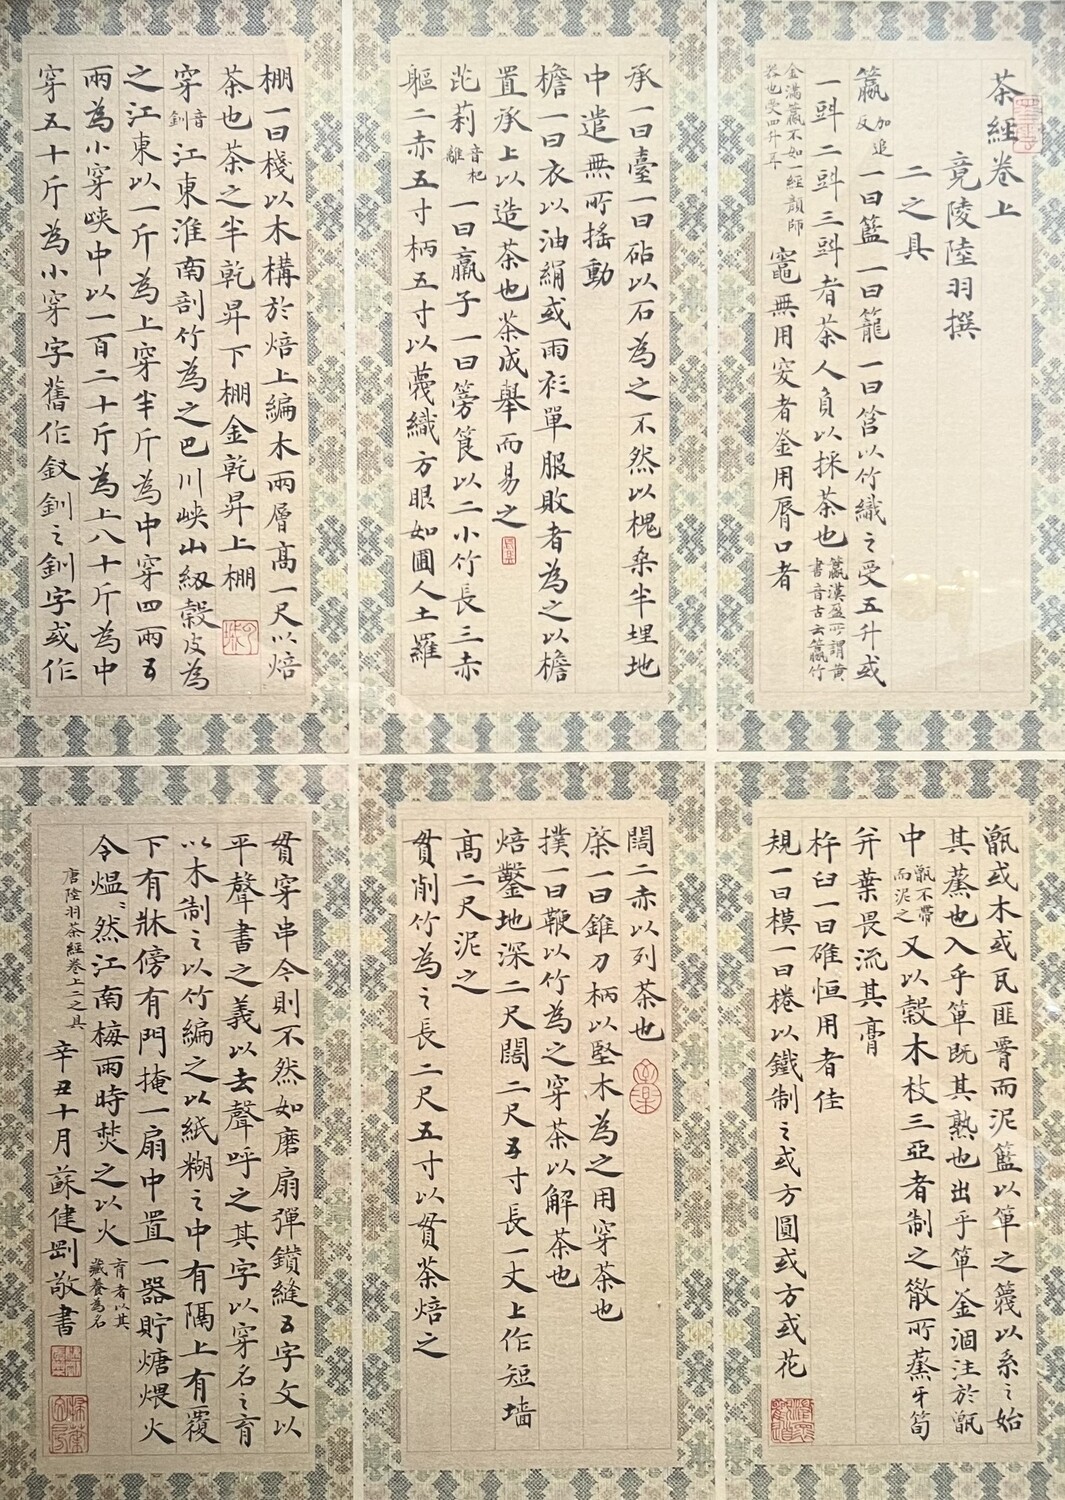 Book of Tea 茶經